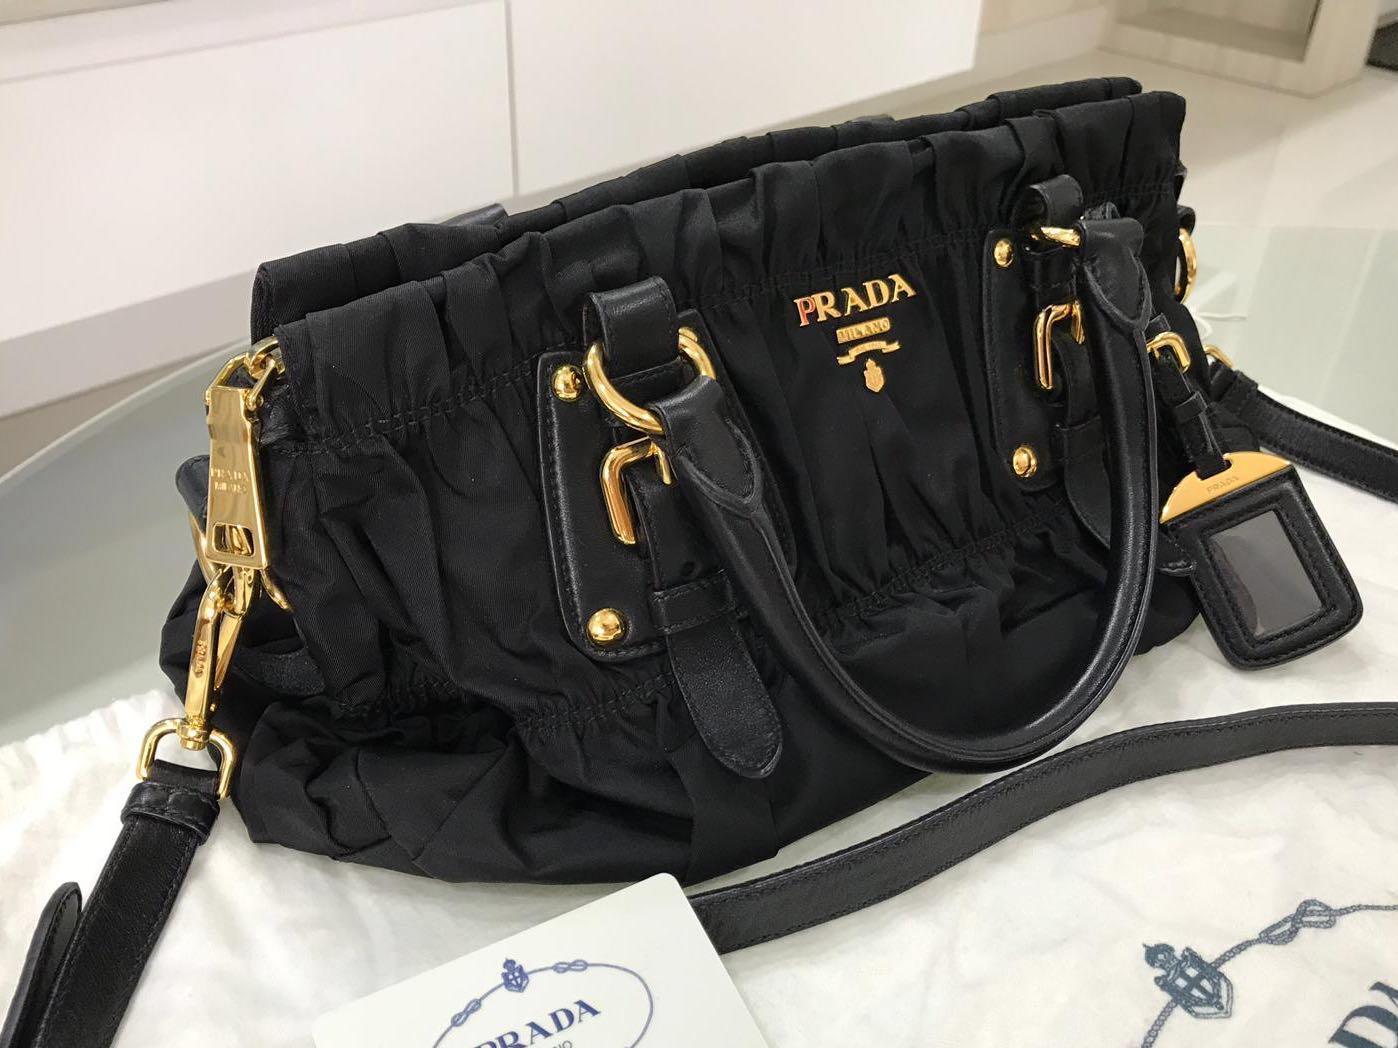 Prada Sling Bag (authentic and LN 